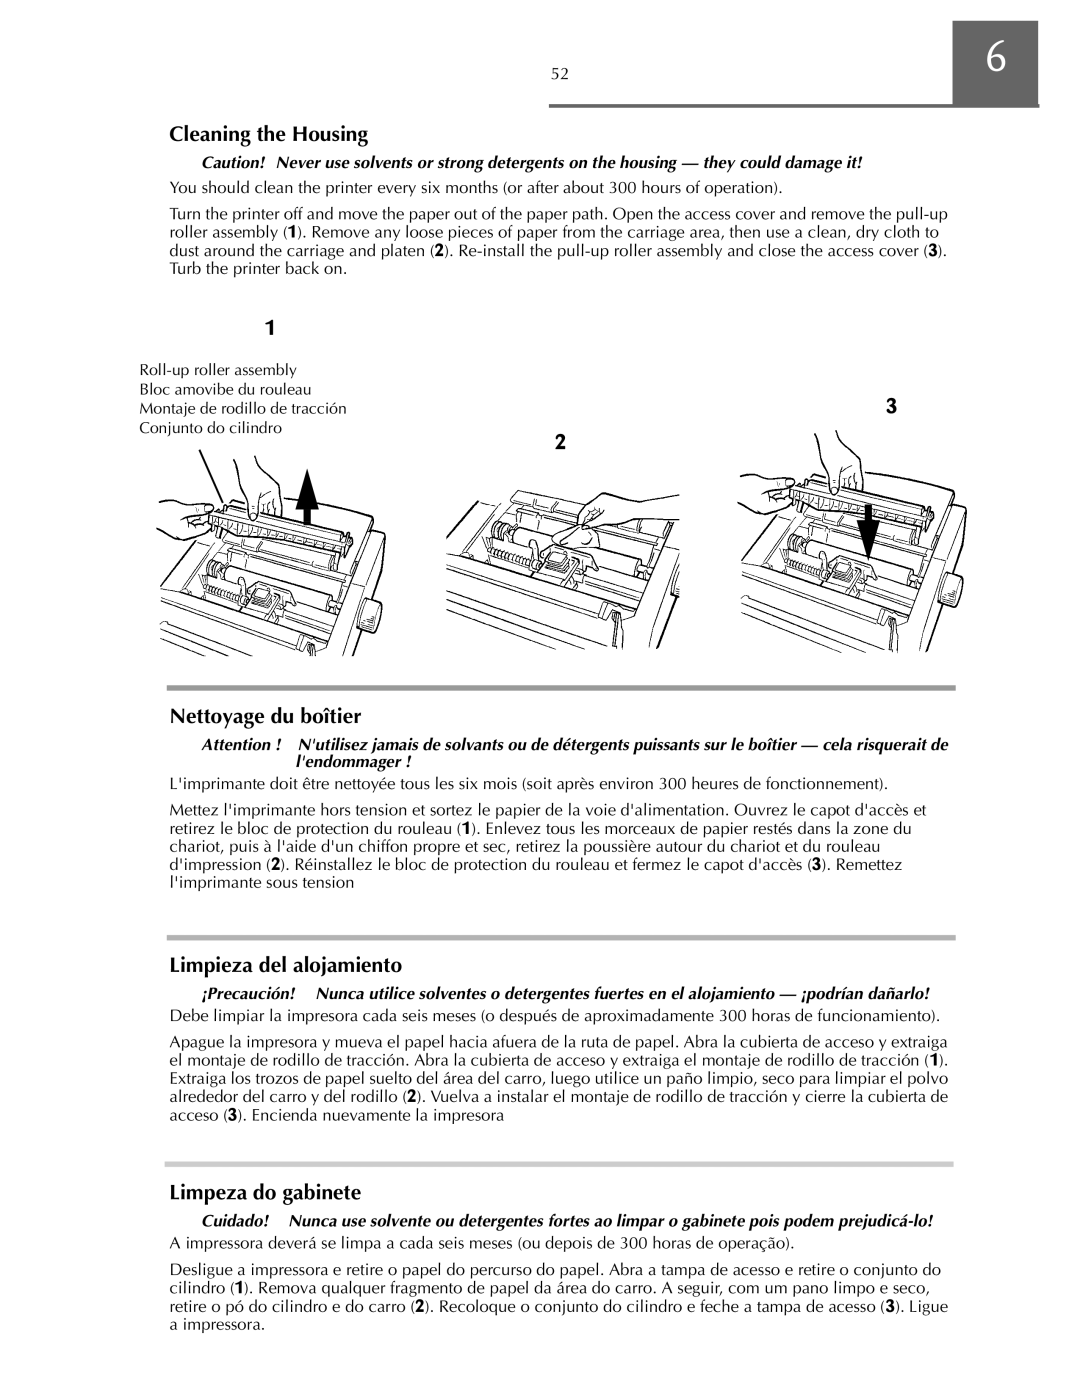 Oki ML590 manual Nettoyage du boîtier, they could damage it 